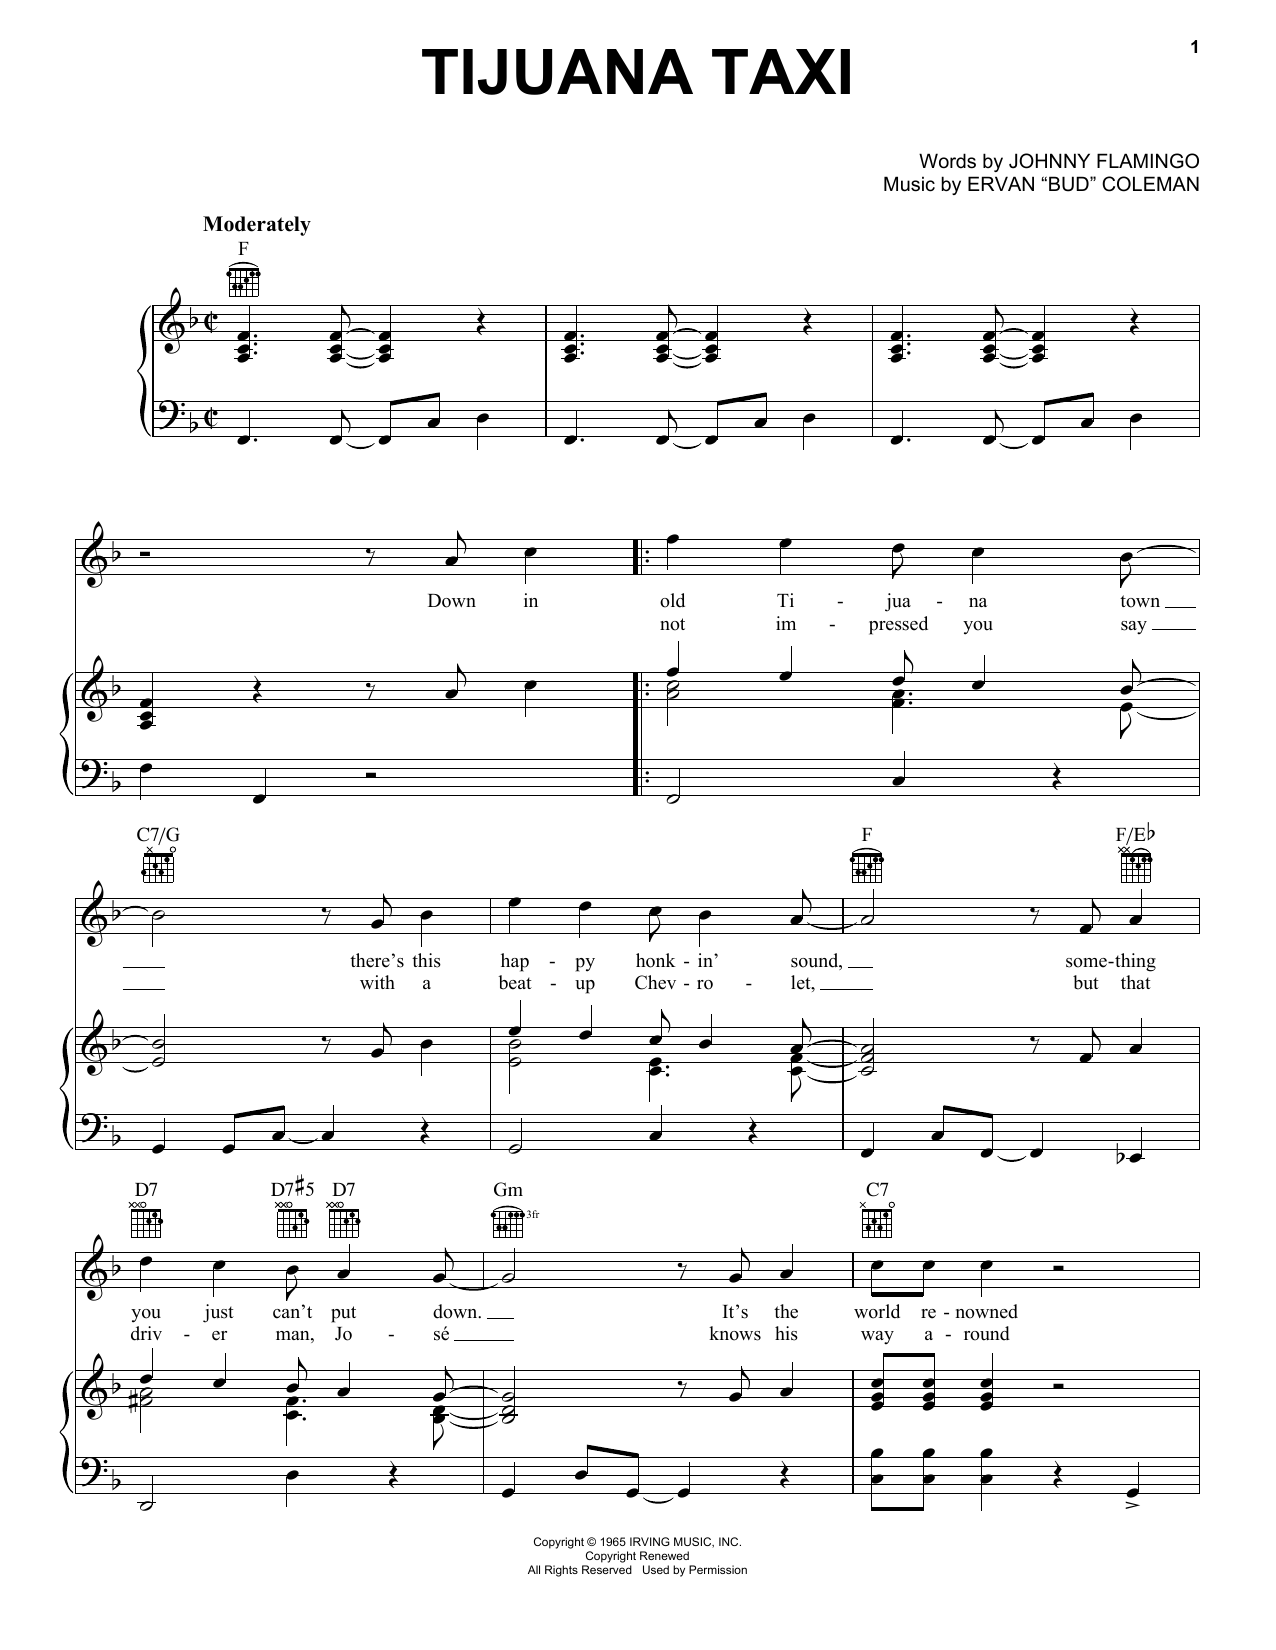 Herb Alpert & The Tijuana Brass Band Tijuana Taxi Sheet Music Notes & Chords for Tenor Saxophone - Download or Print PDF